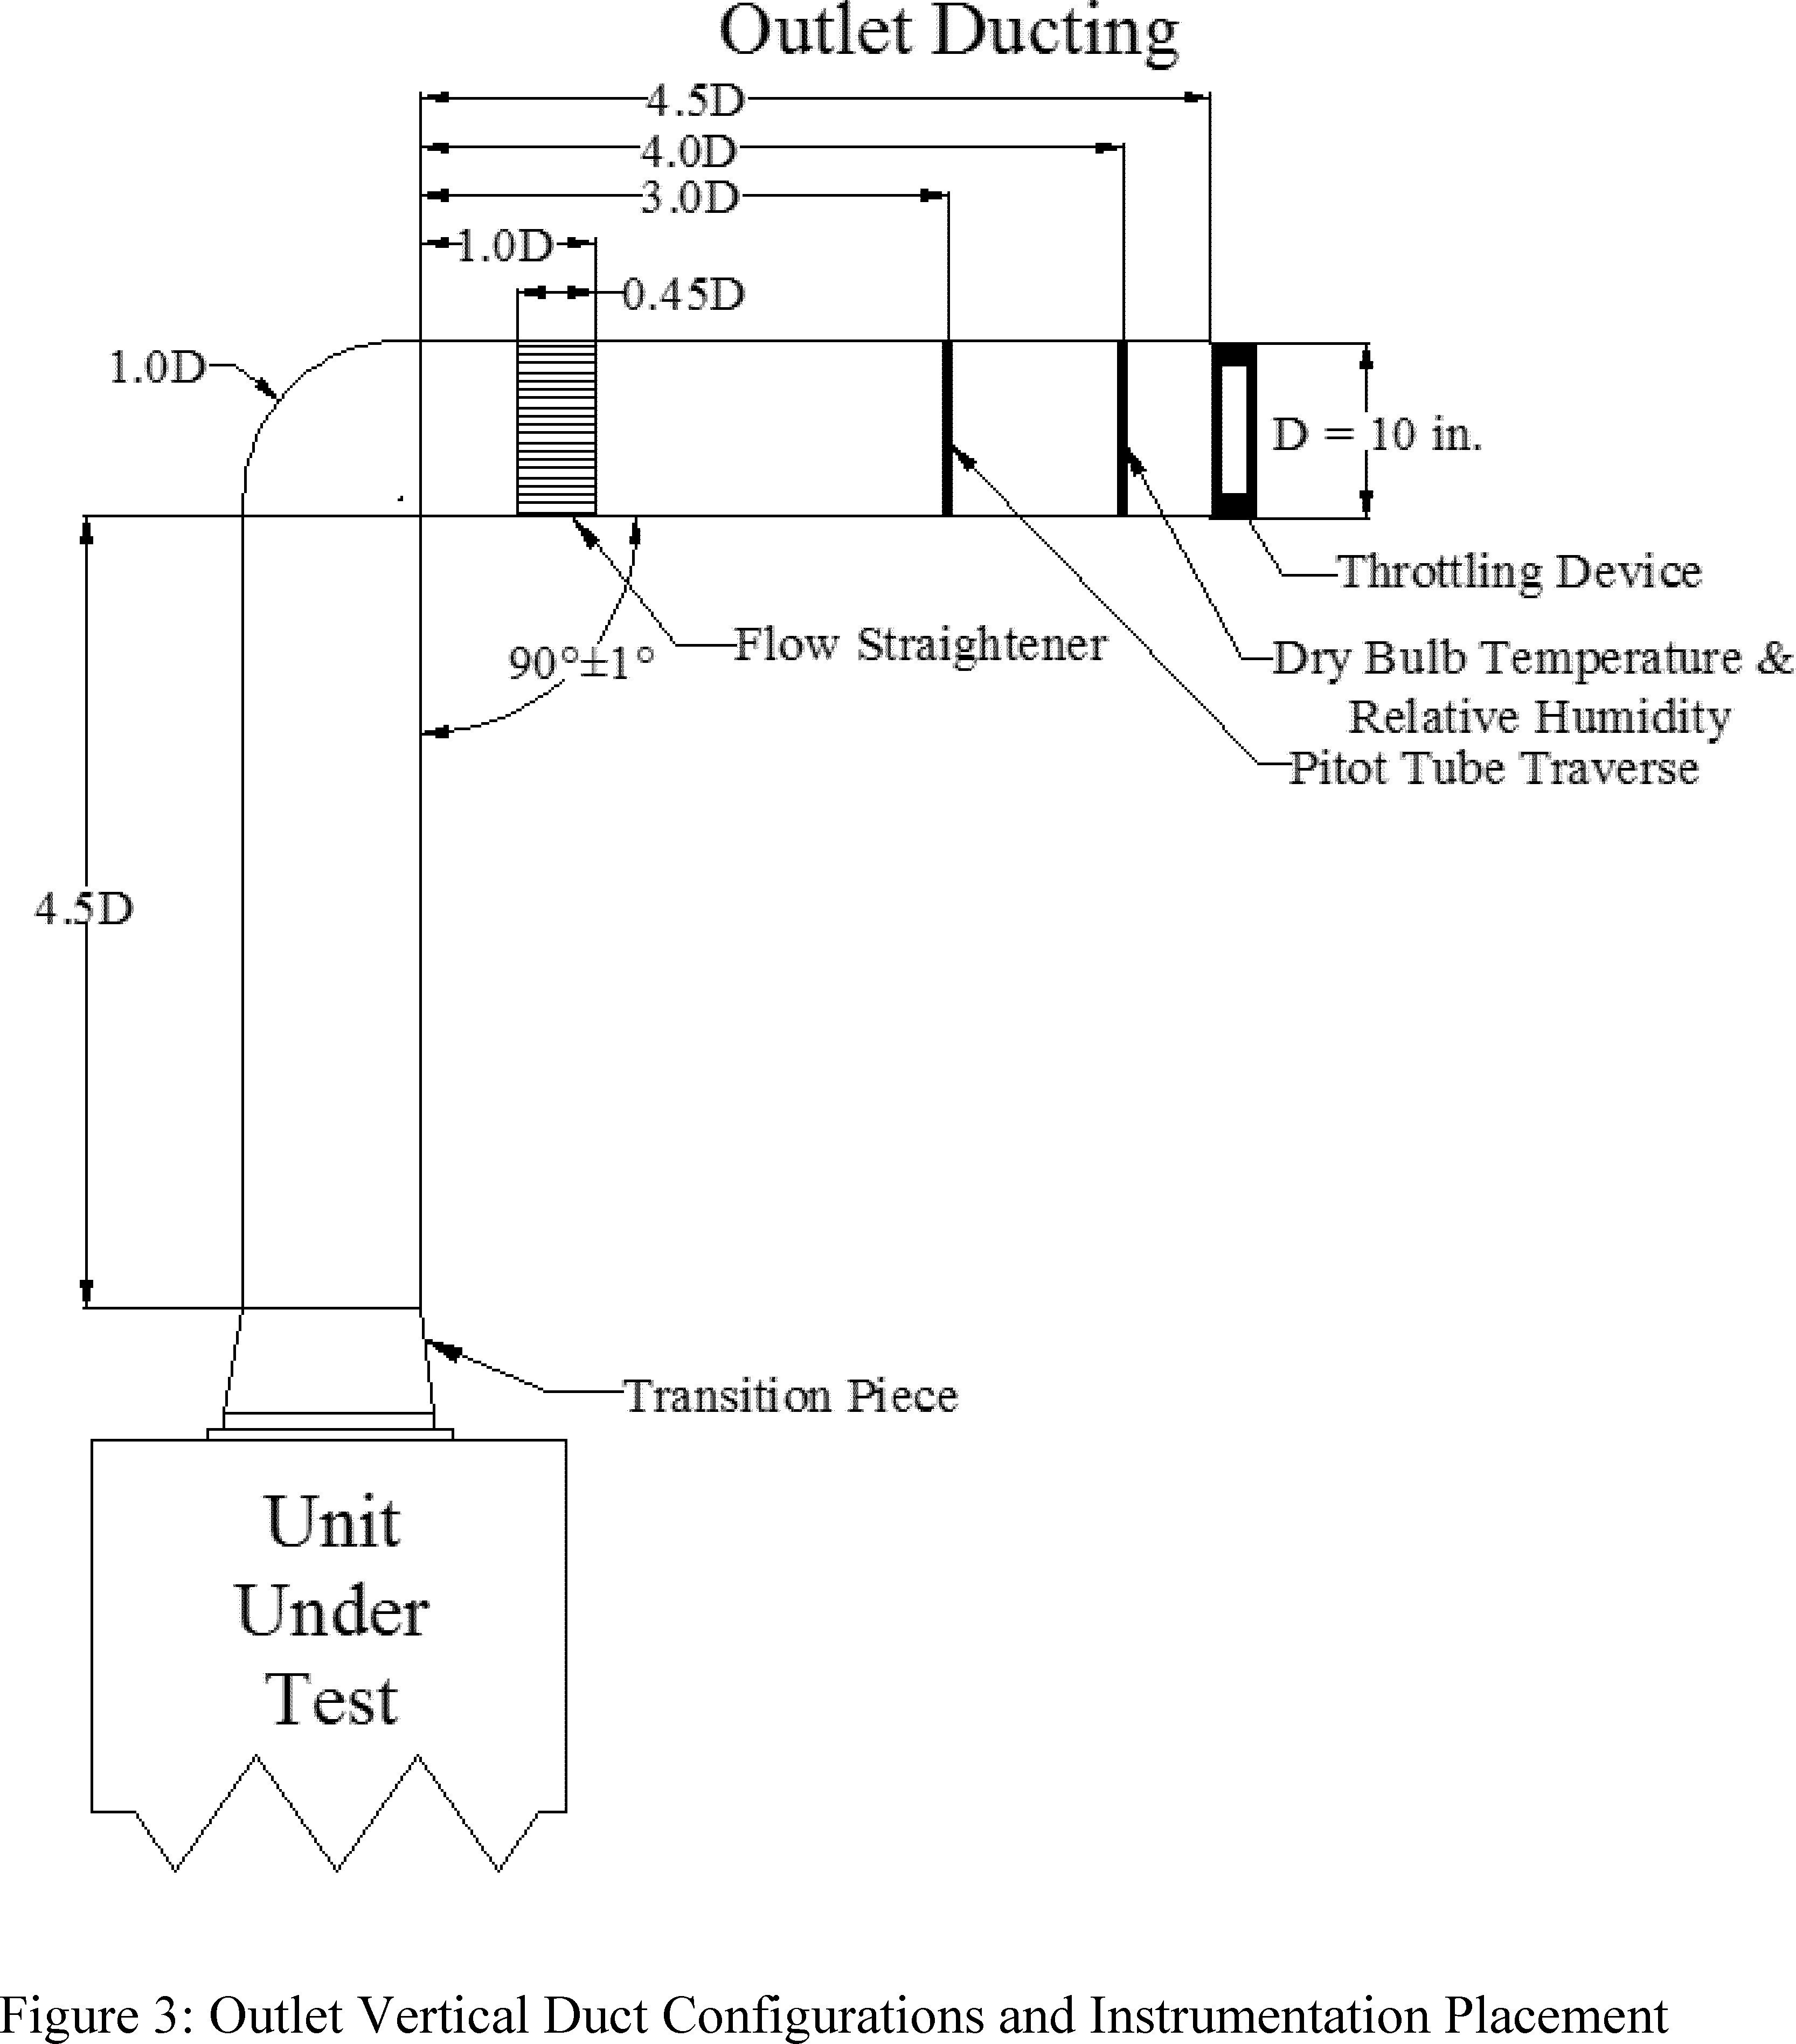 Phone Wiring Diagram Book Wiring Diagram For Home Fresh Home Phone Wiring Diagram Using Cat5